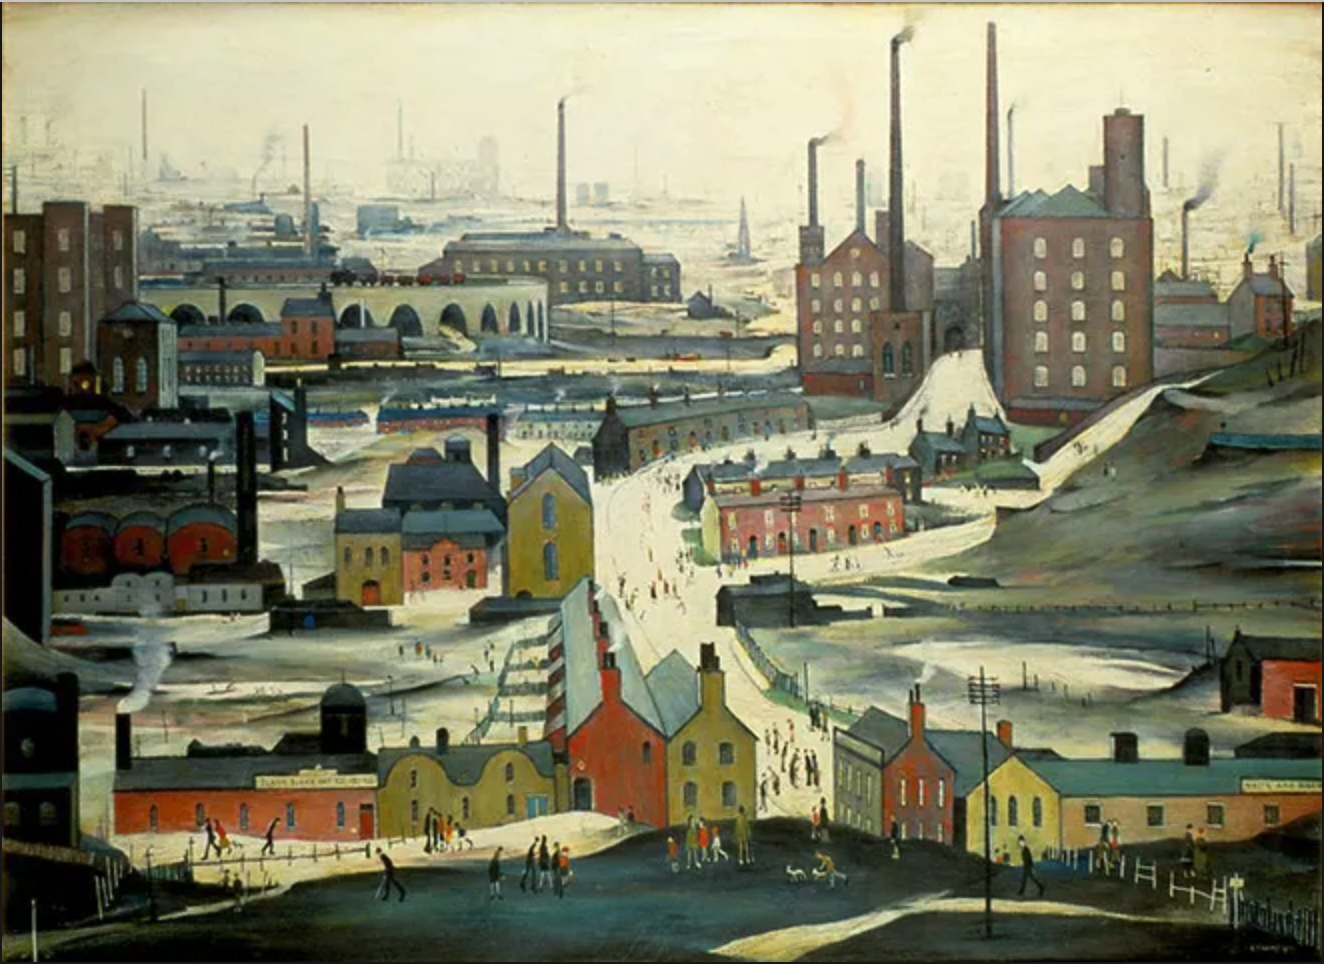 Industrial Landscape, Ashton-Under-Lyne (1952) by Laurence Stephen Lowry (1887 - 1976), English artist.